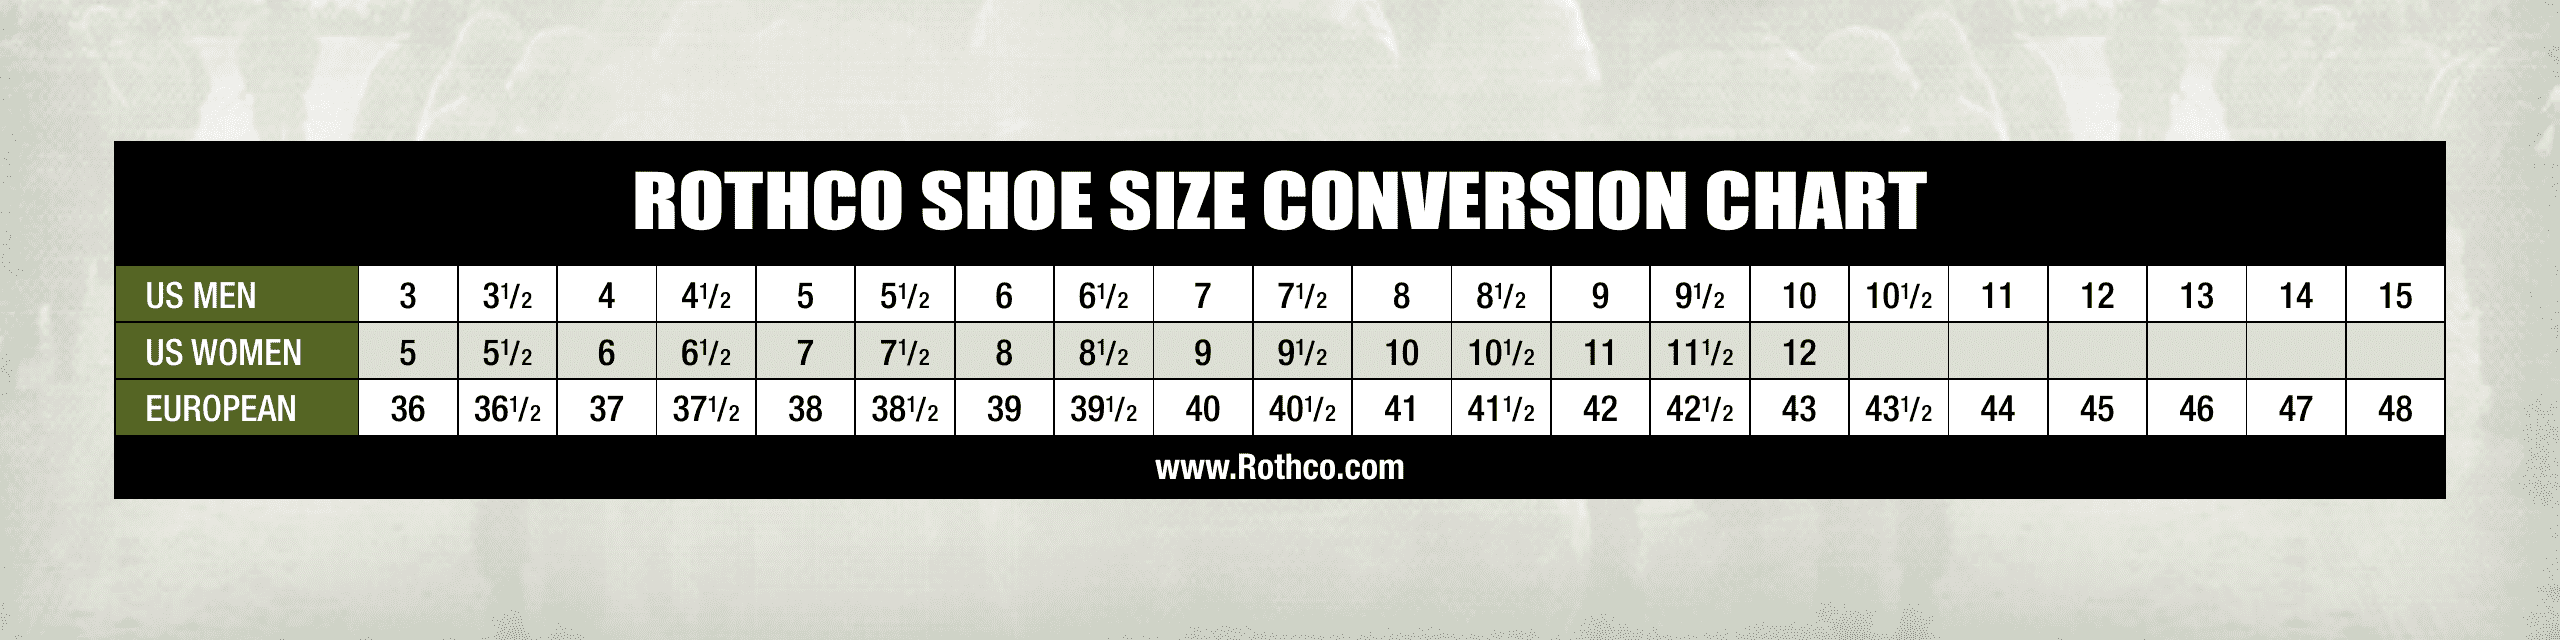 Shoe Size Conversion Chart - Rothco Download Pdf